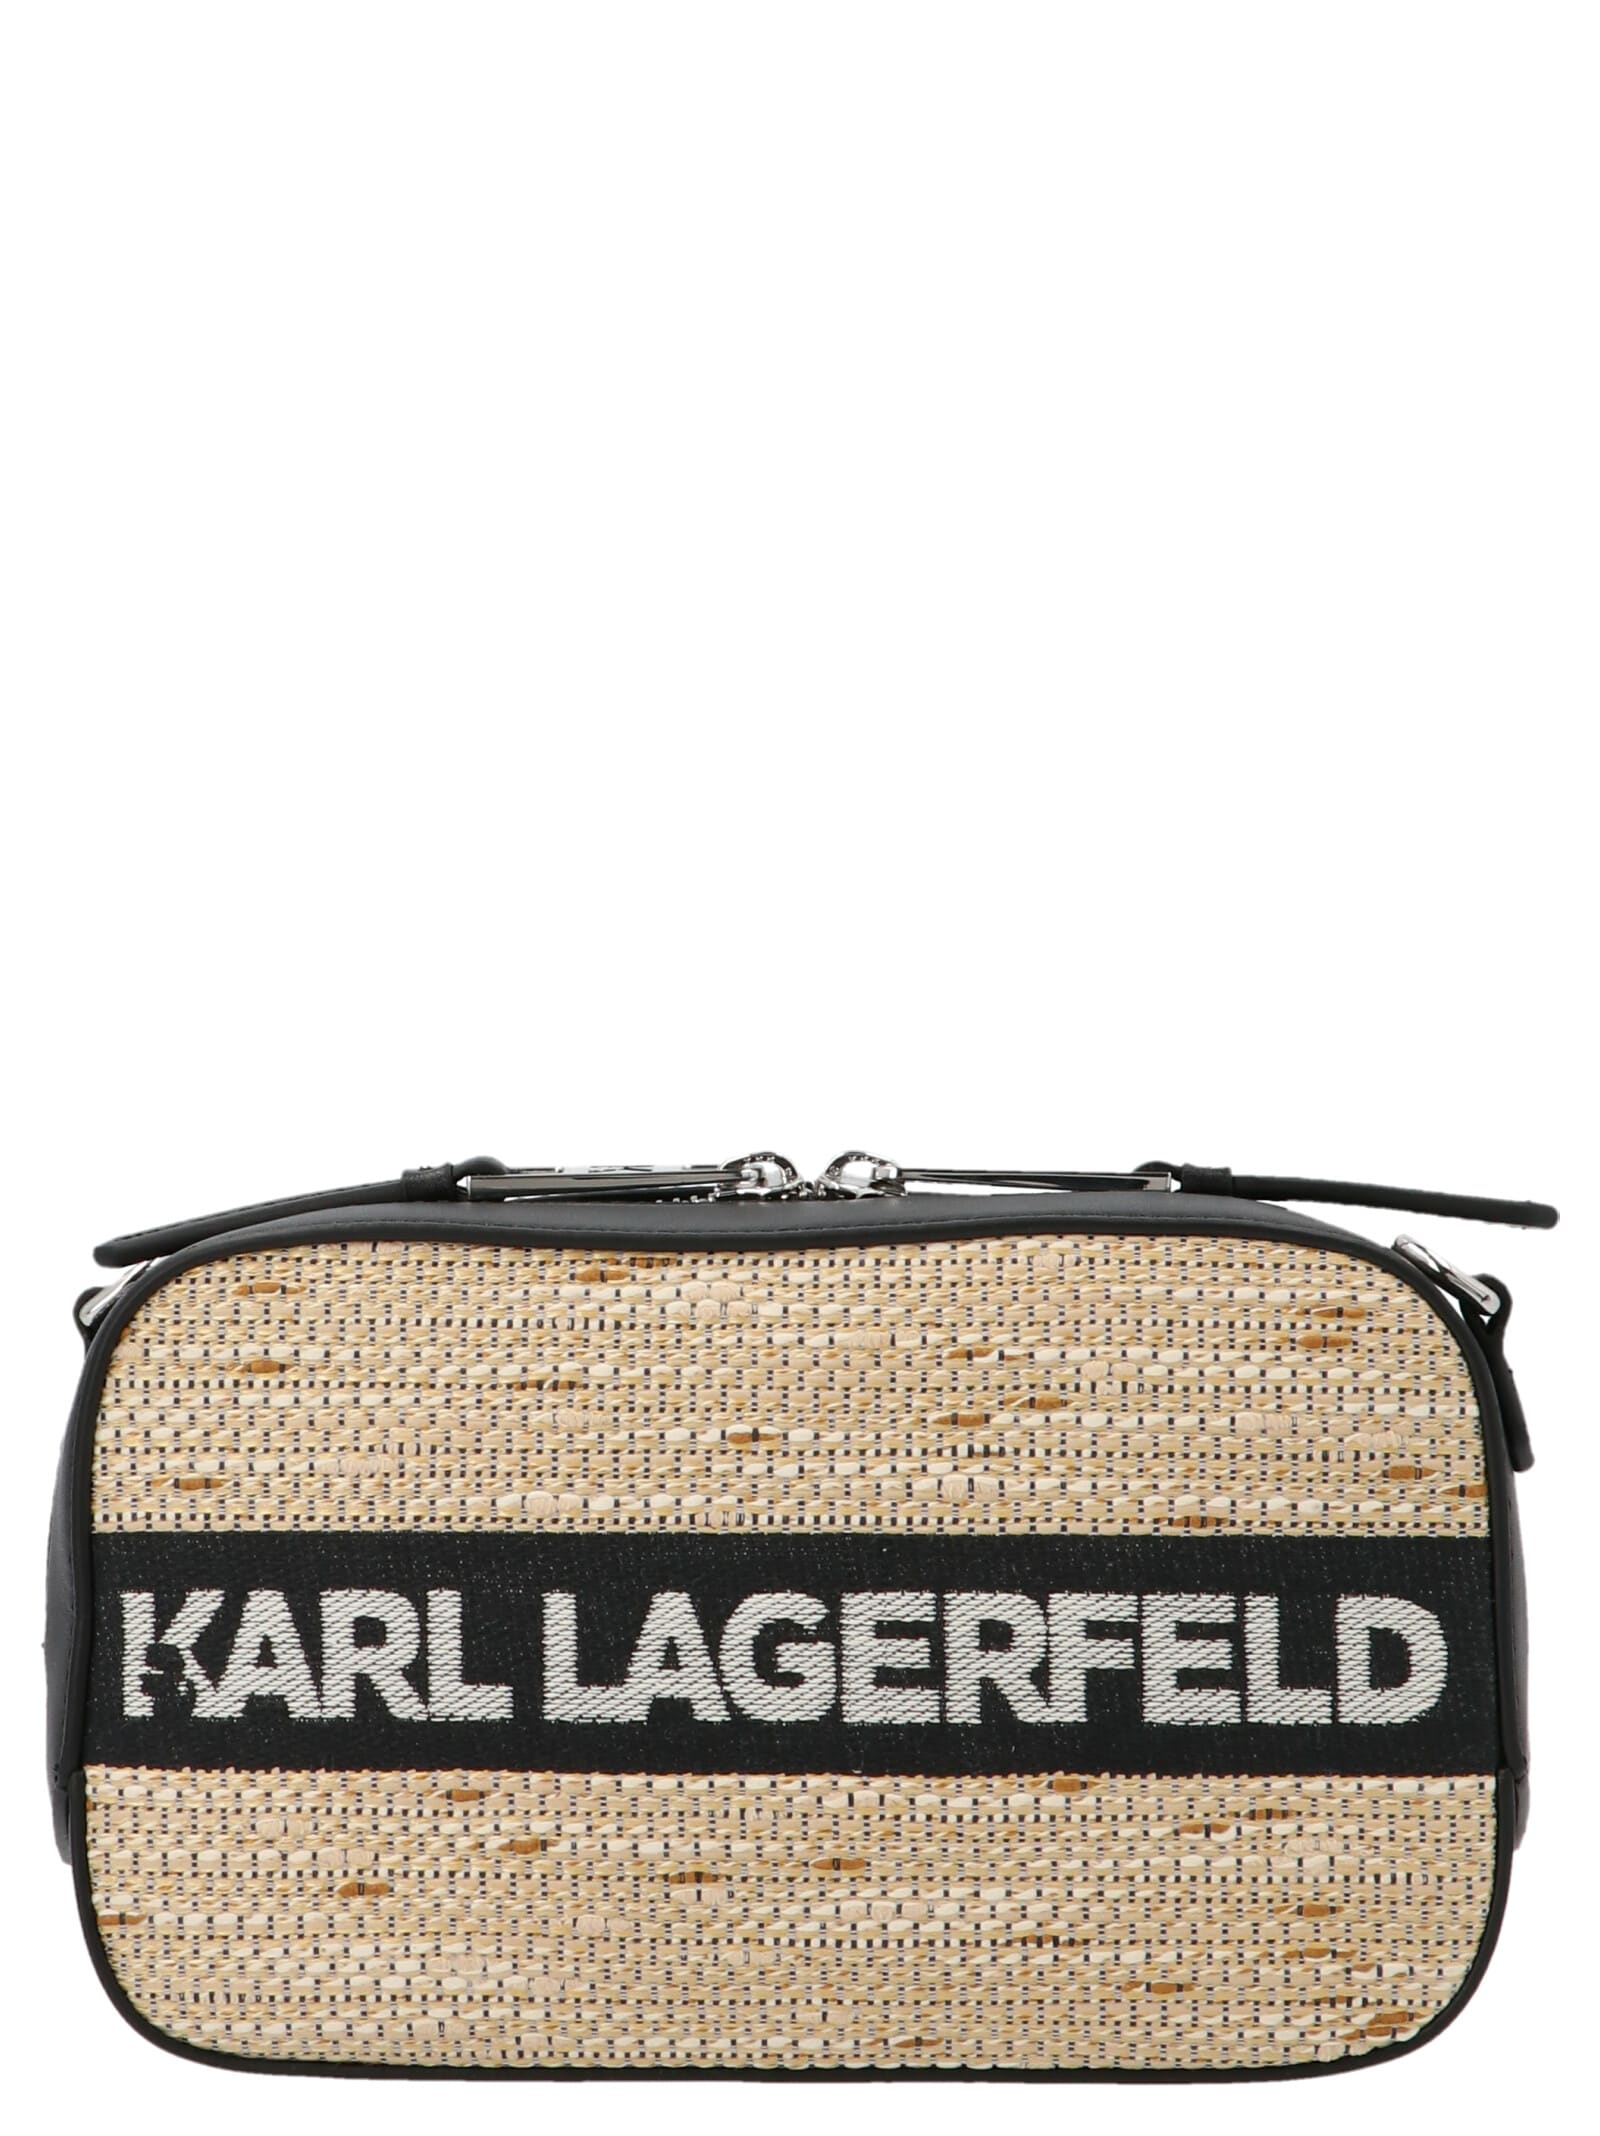 Karl Lagerfeld camera Bag